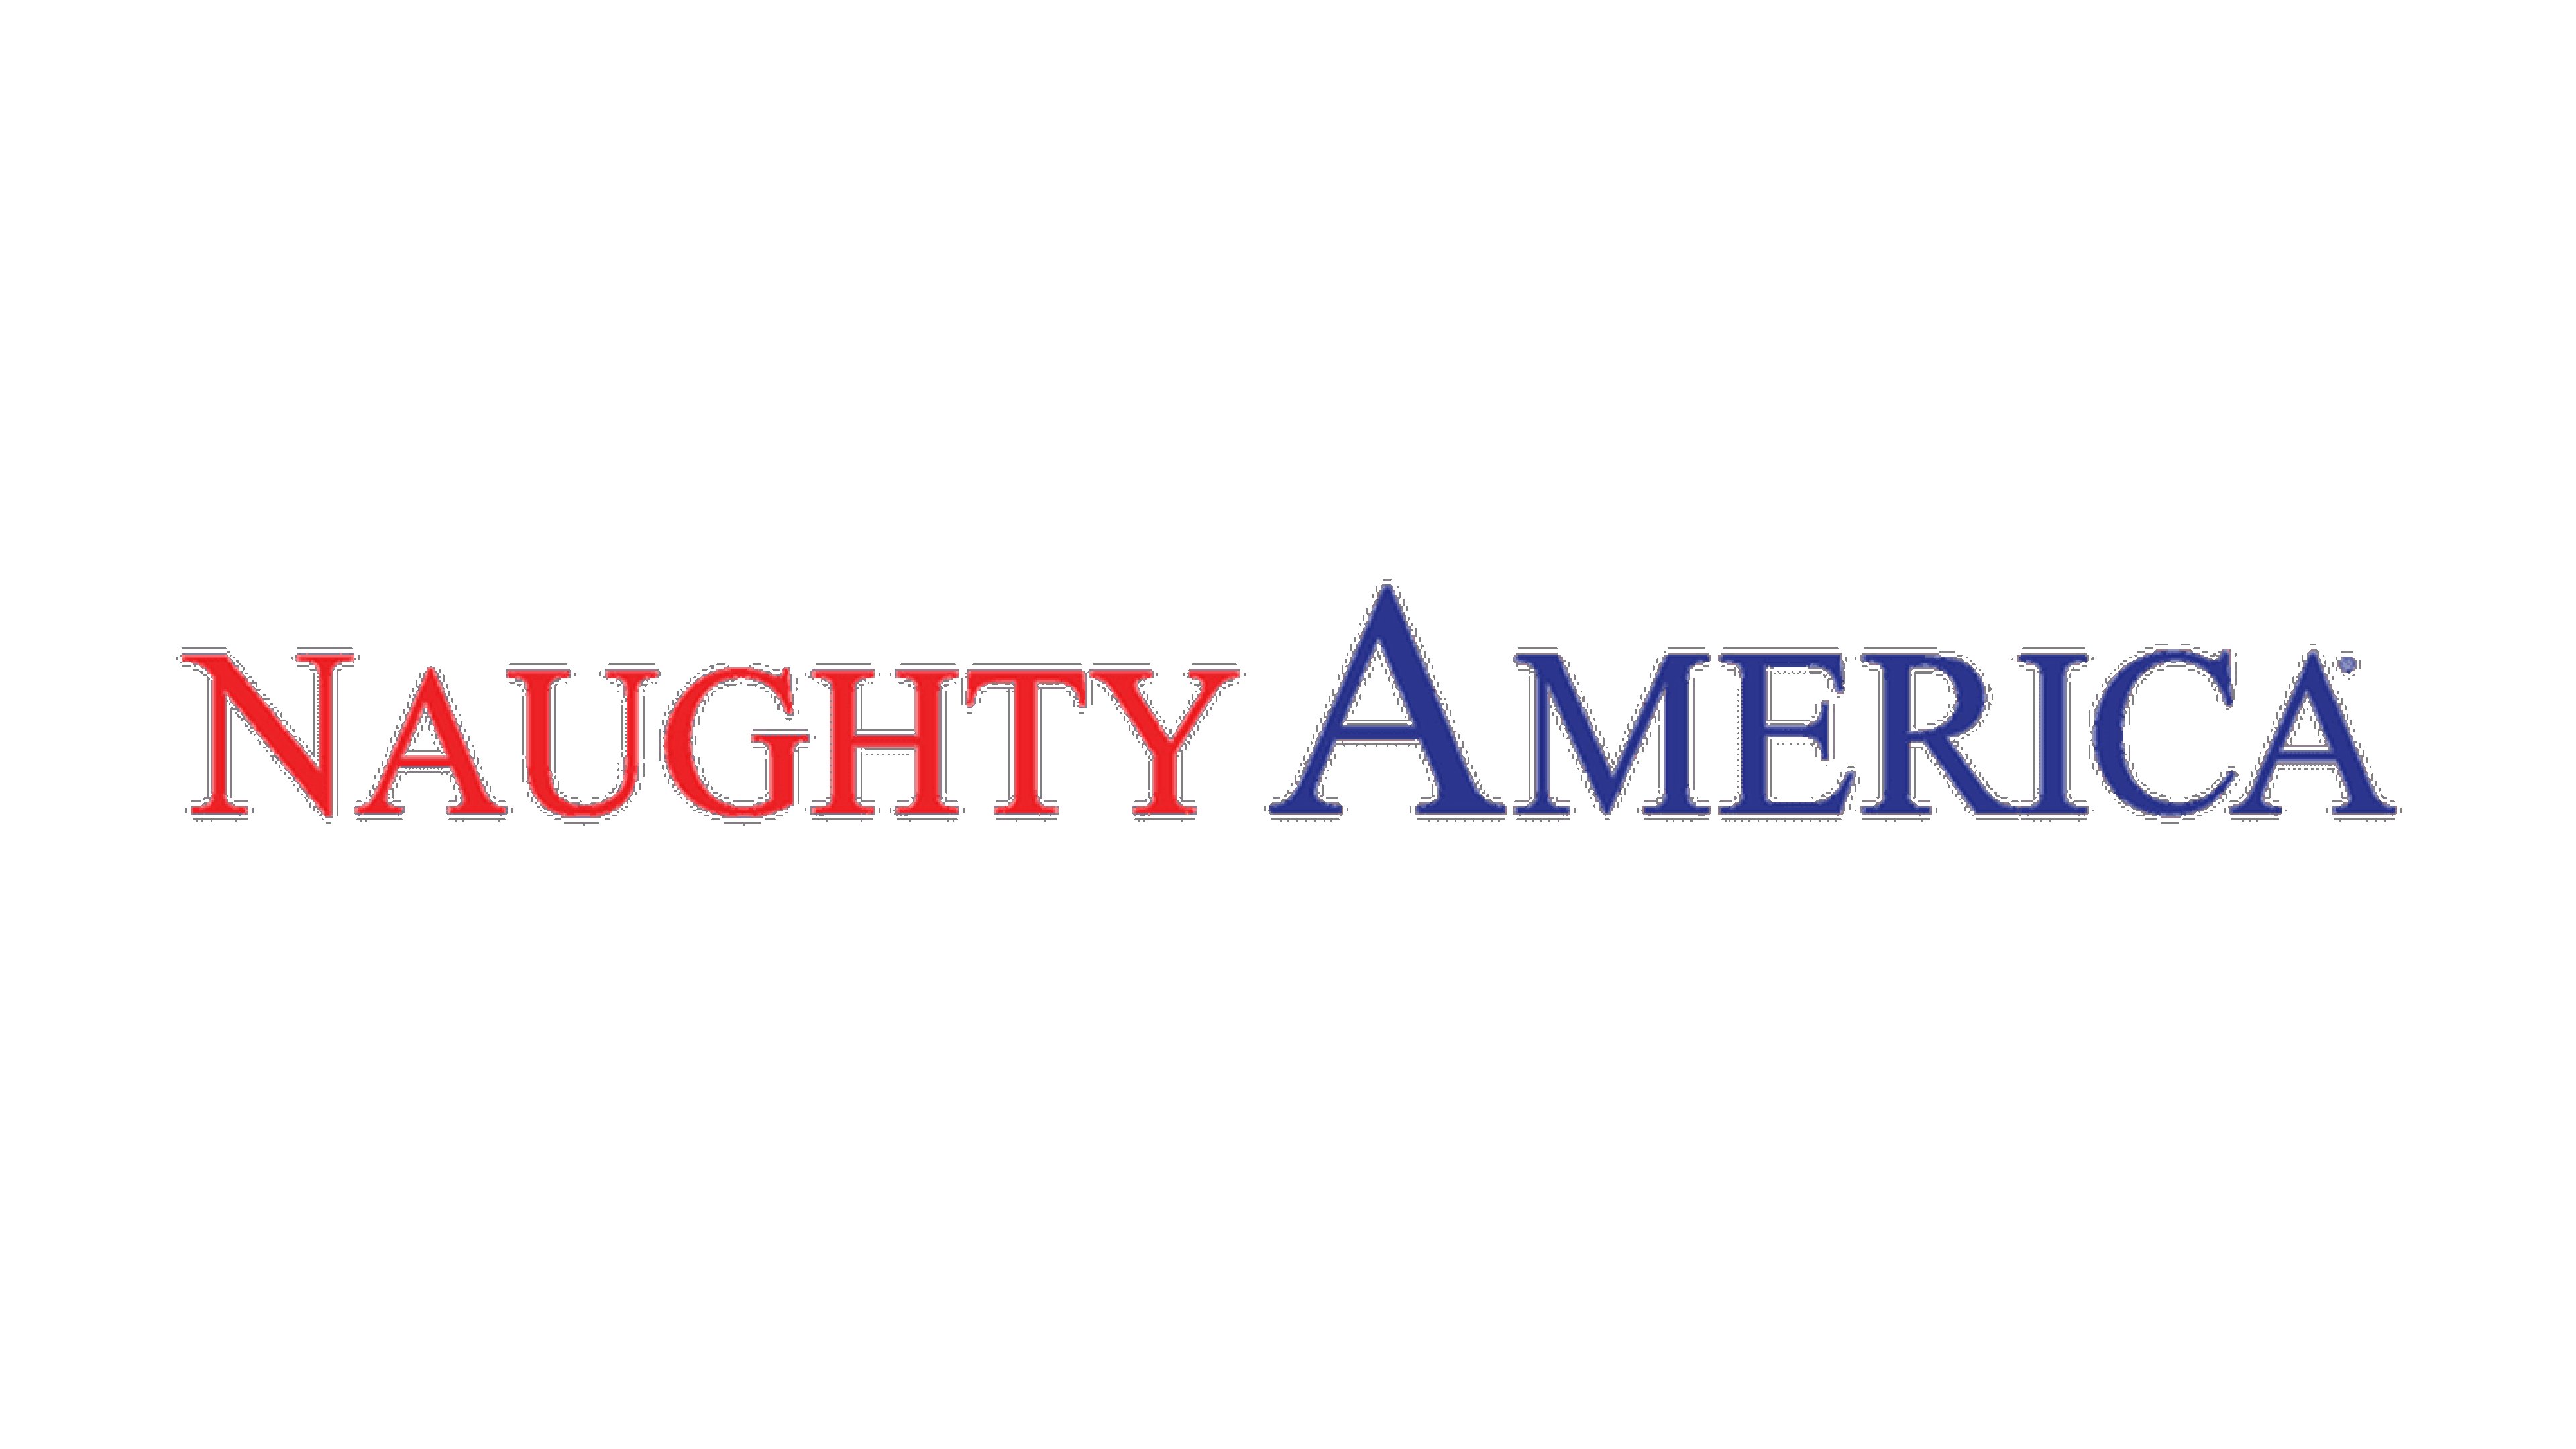 Naughtyamarika - NaughtyAmerica Logo and symbol, meaning, history, PNG, new